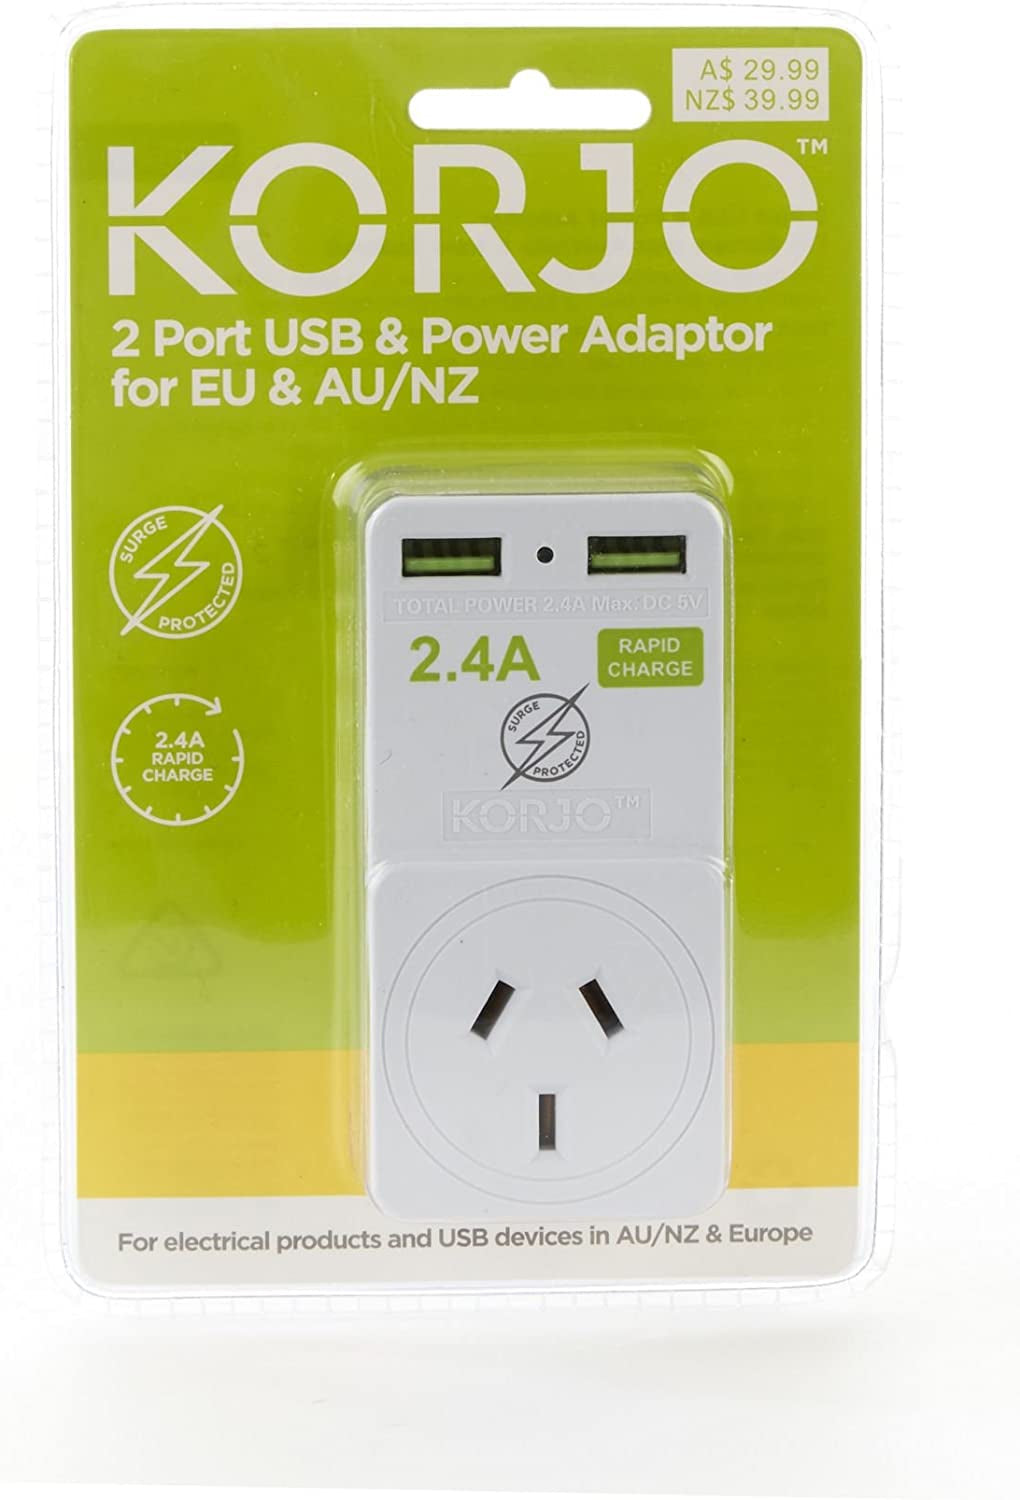 KORJO, Korjo EU USB Power Adaptor, 2X USB Sockets, 1X AUS/NZ Socket, for Europe